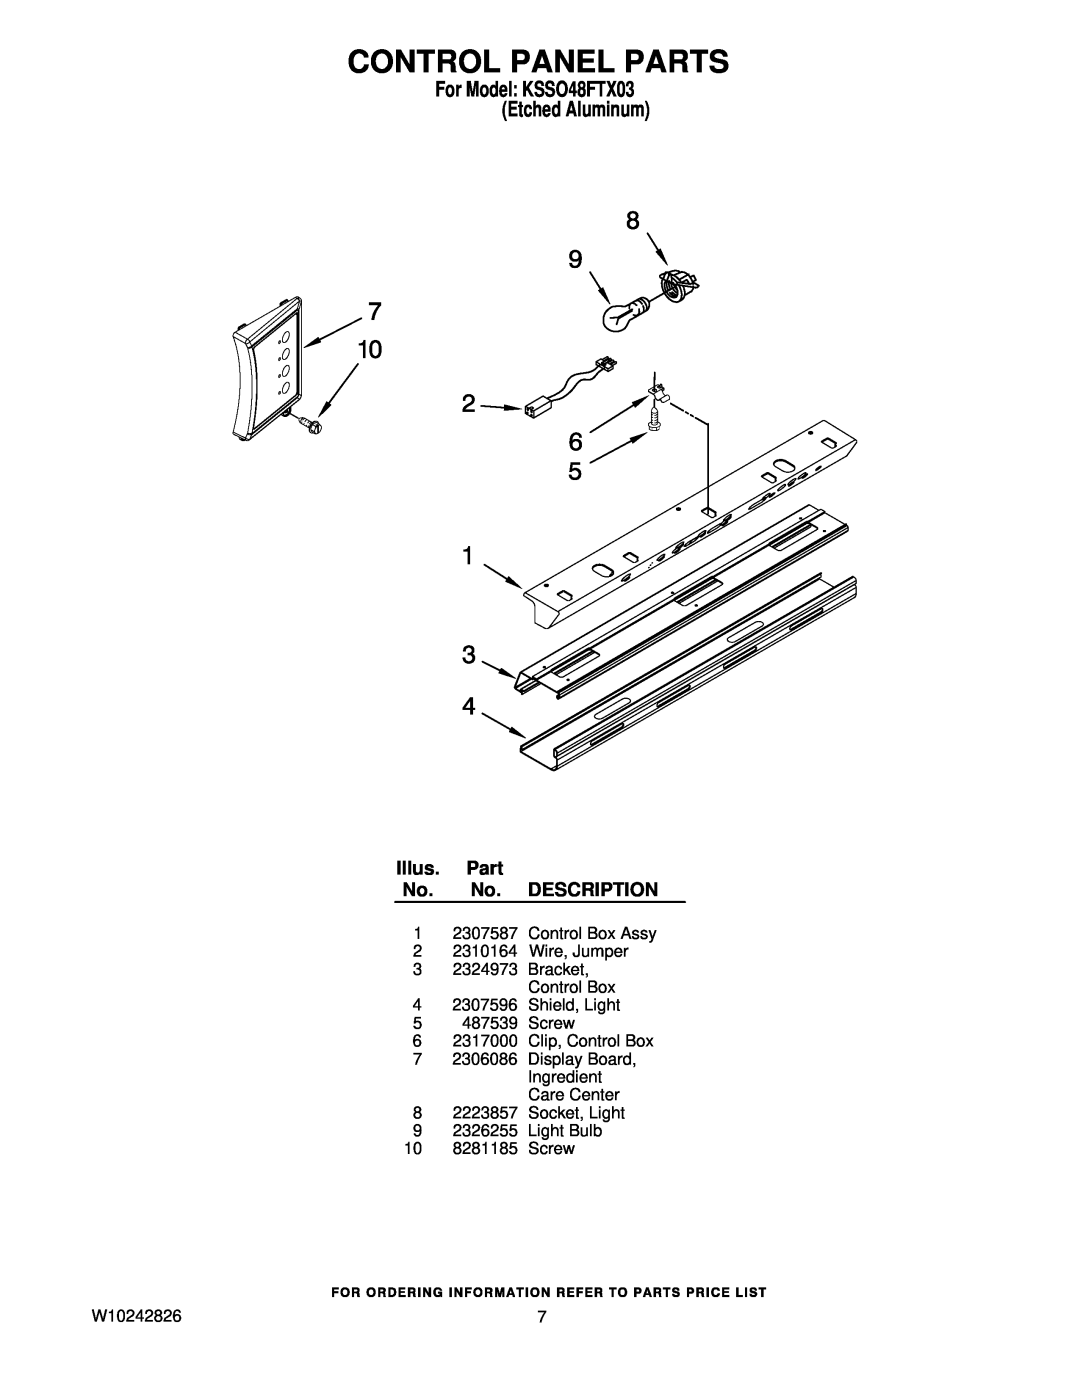 KitchenAid manual Control Panel Parts, For Model KSSO48FTX03 Etched Aluminum, Illus. Part No. No. DESCRIPTION 